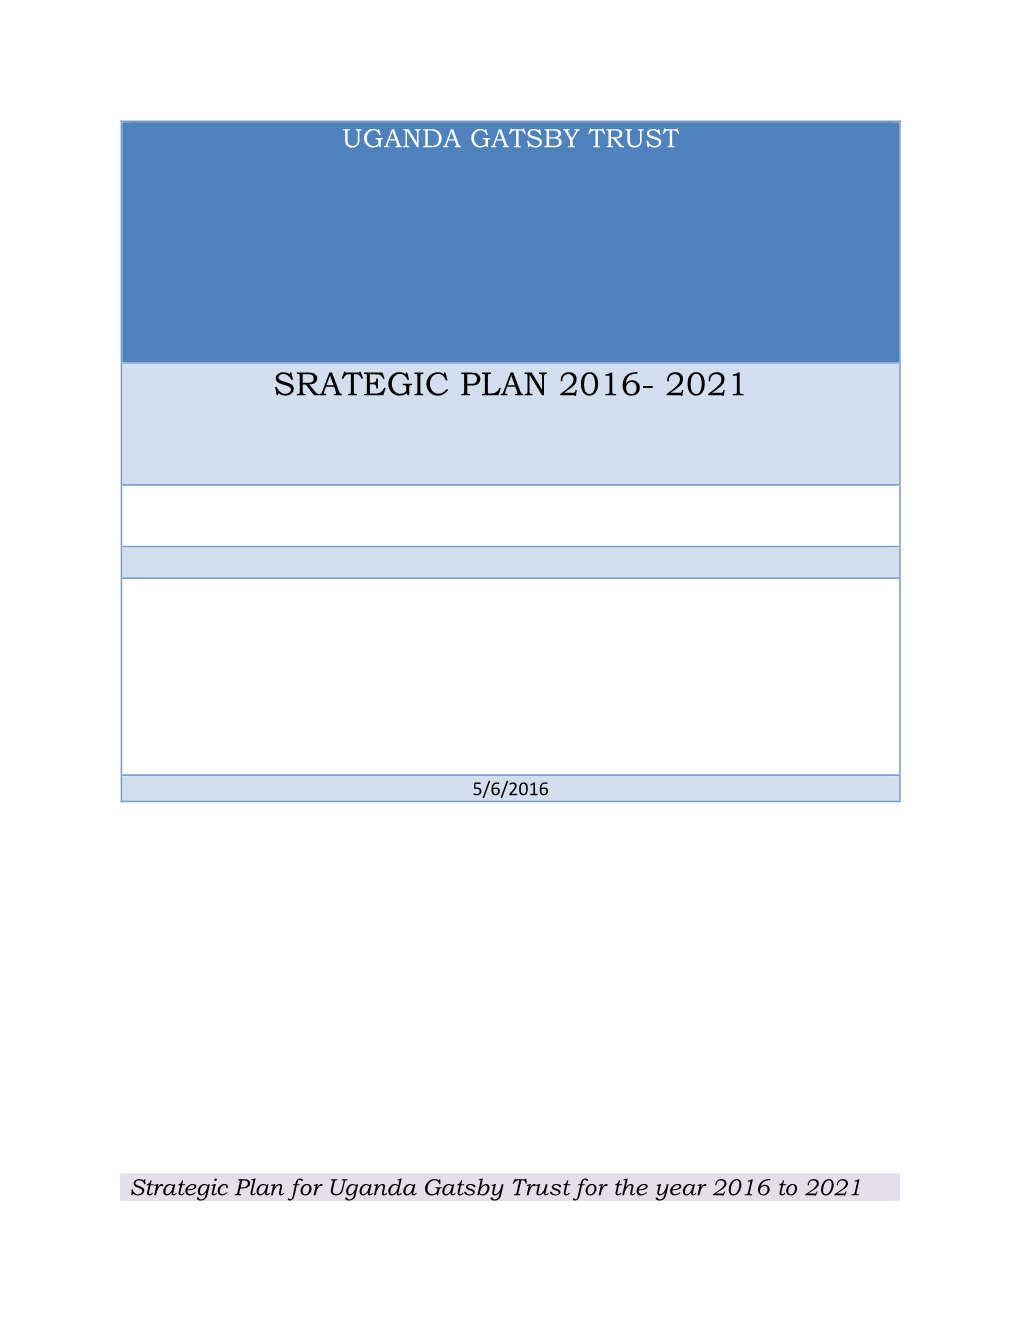 Srategic Plan 2016- 2021